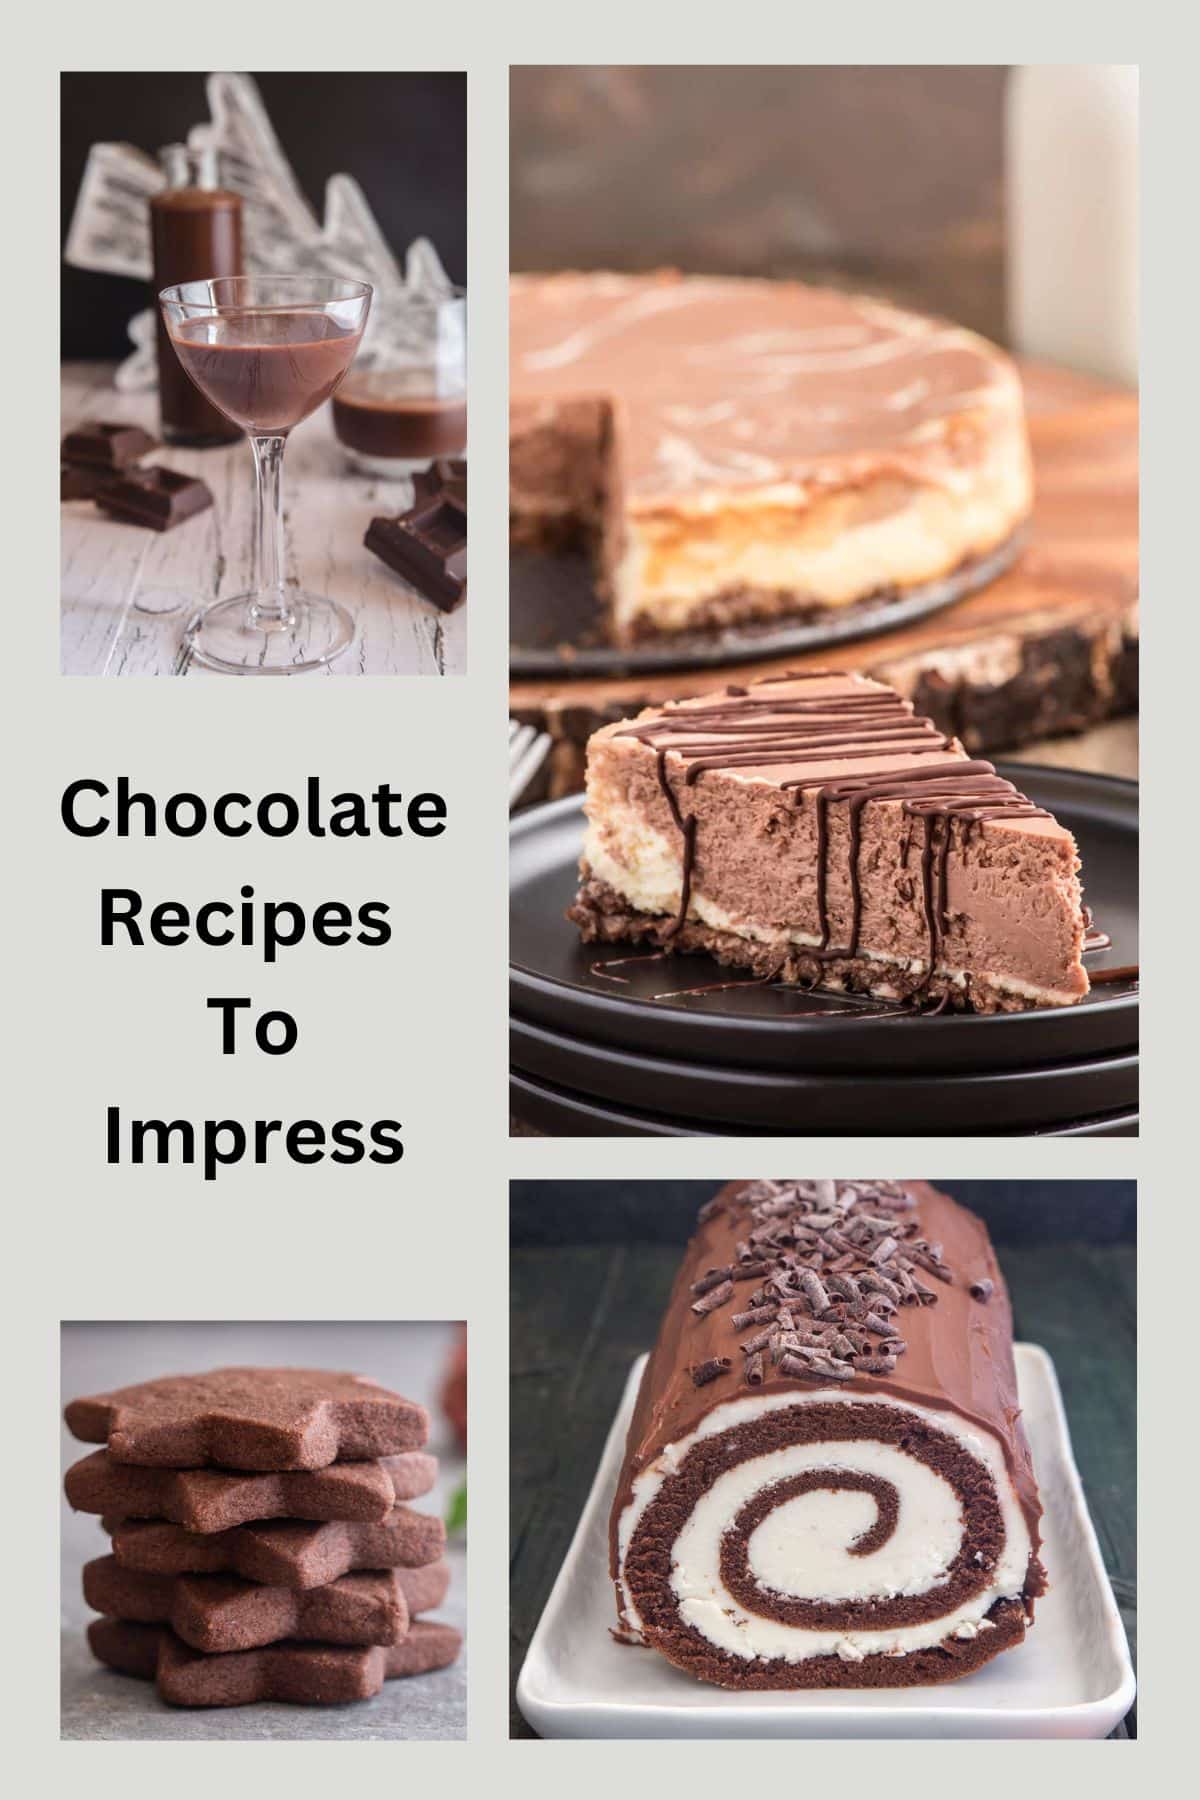 Chocolate Recipes to Impress